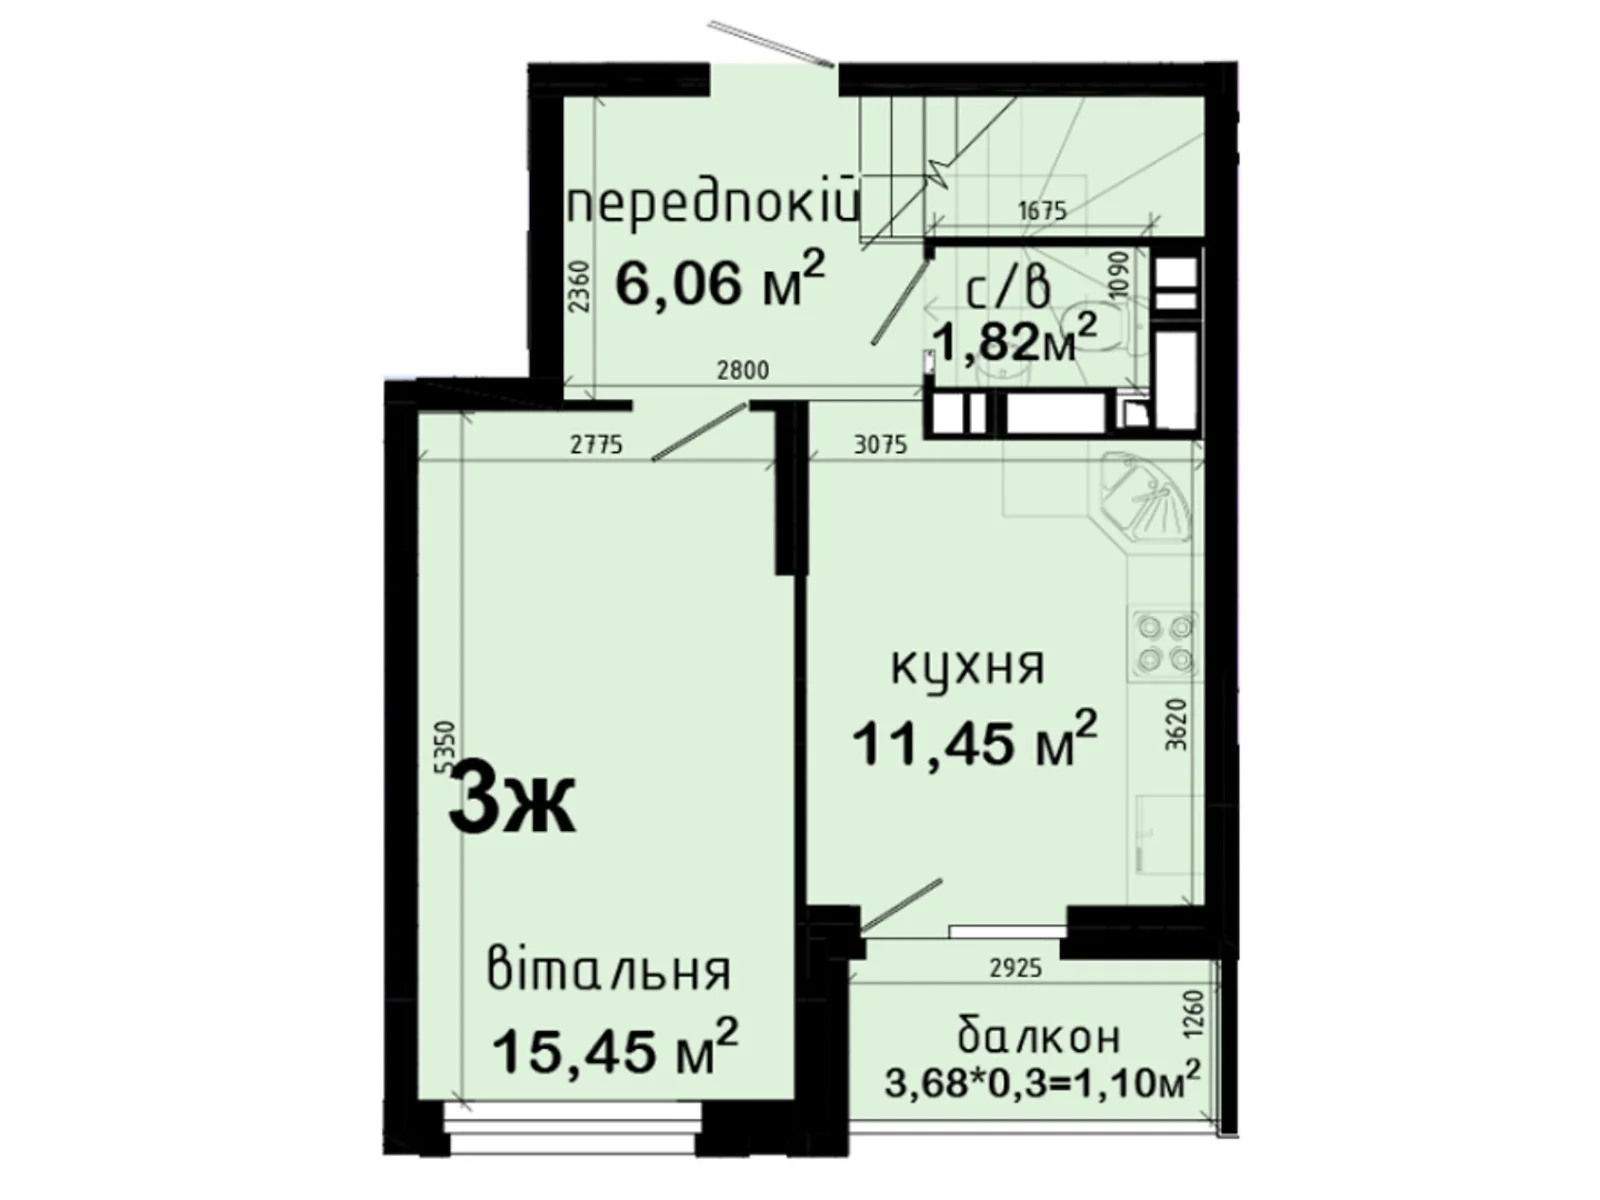 Продается 3-комнатная квартира 78.26 кв. м в Киеве, просп. Академика Глушкова, 42